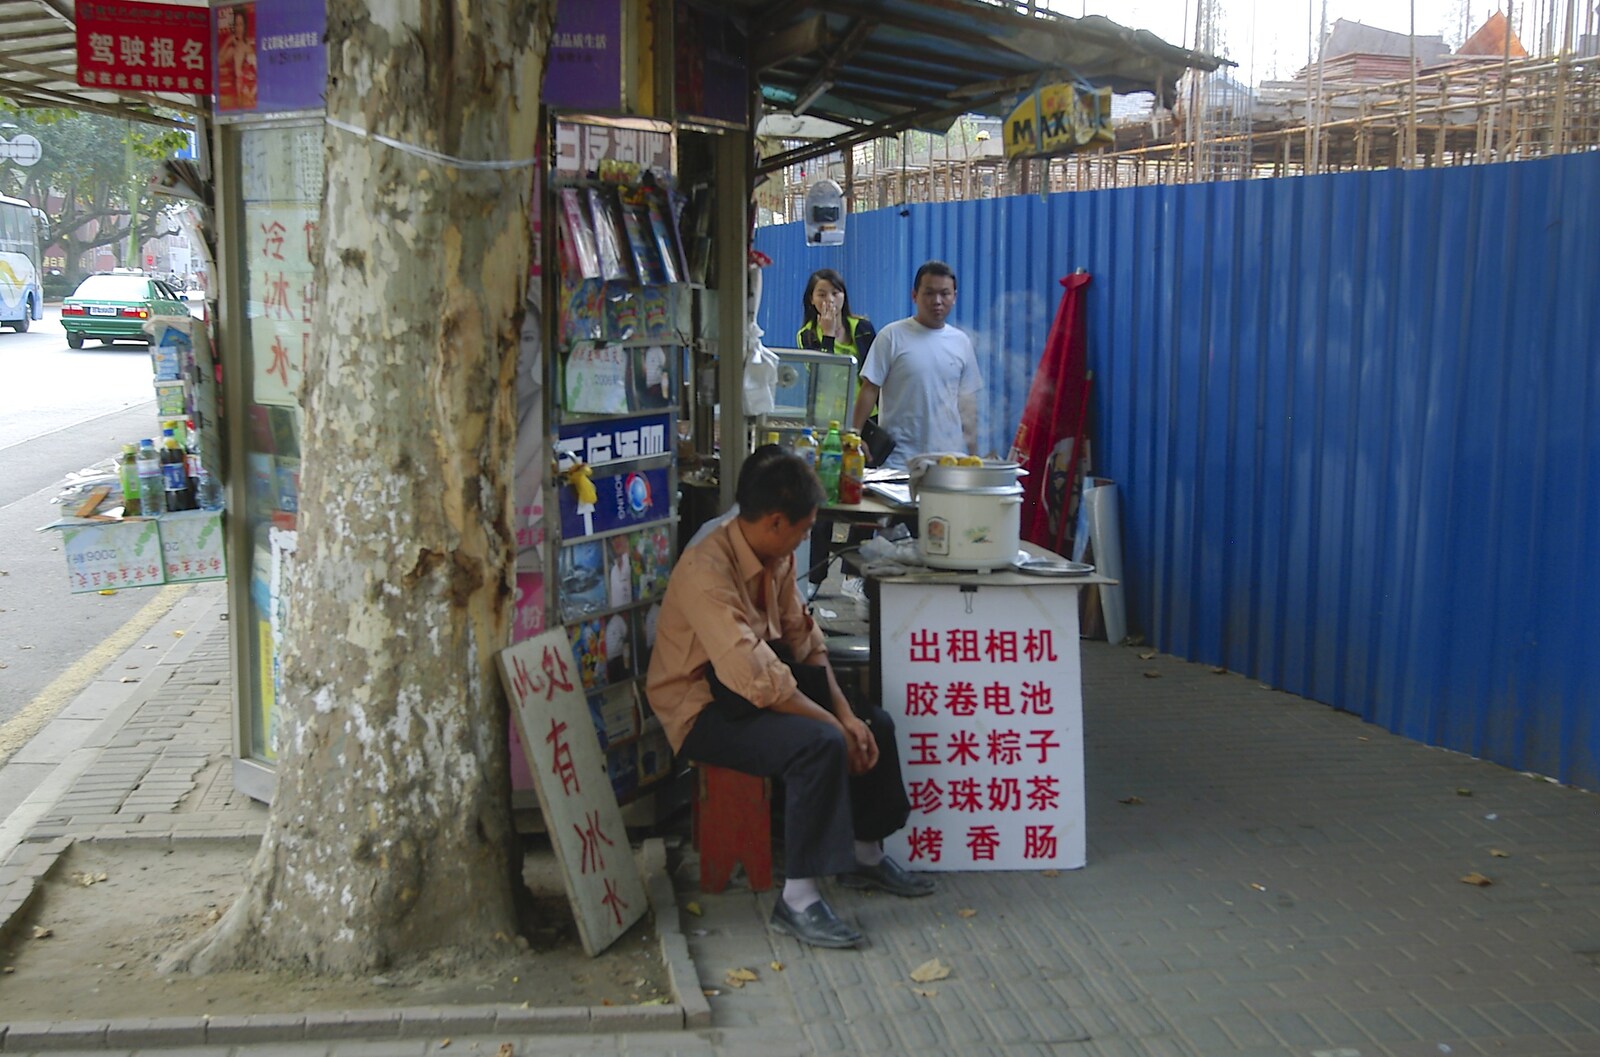 A street-side shop from A Few Days in Nanjing, Jiangsu Province, China - 7th October 2006